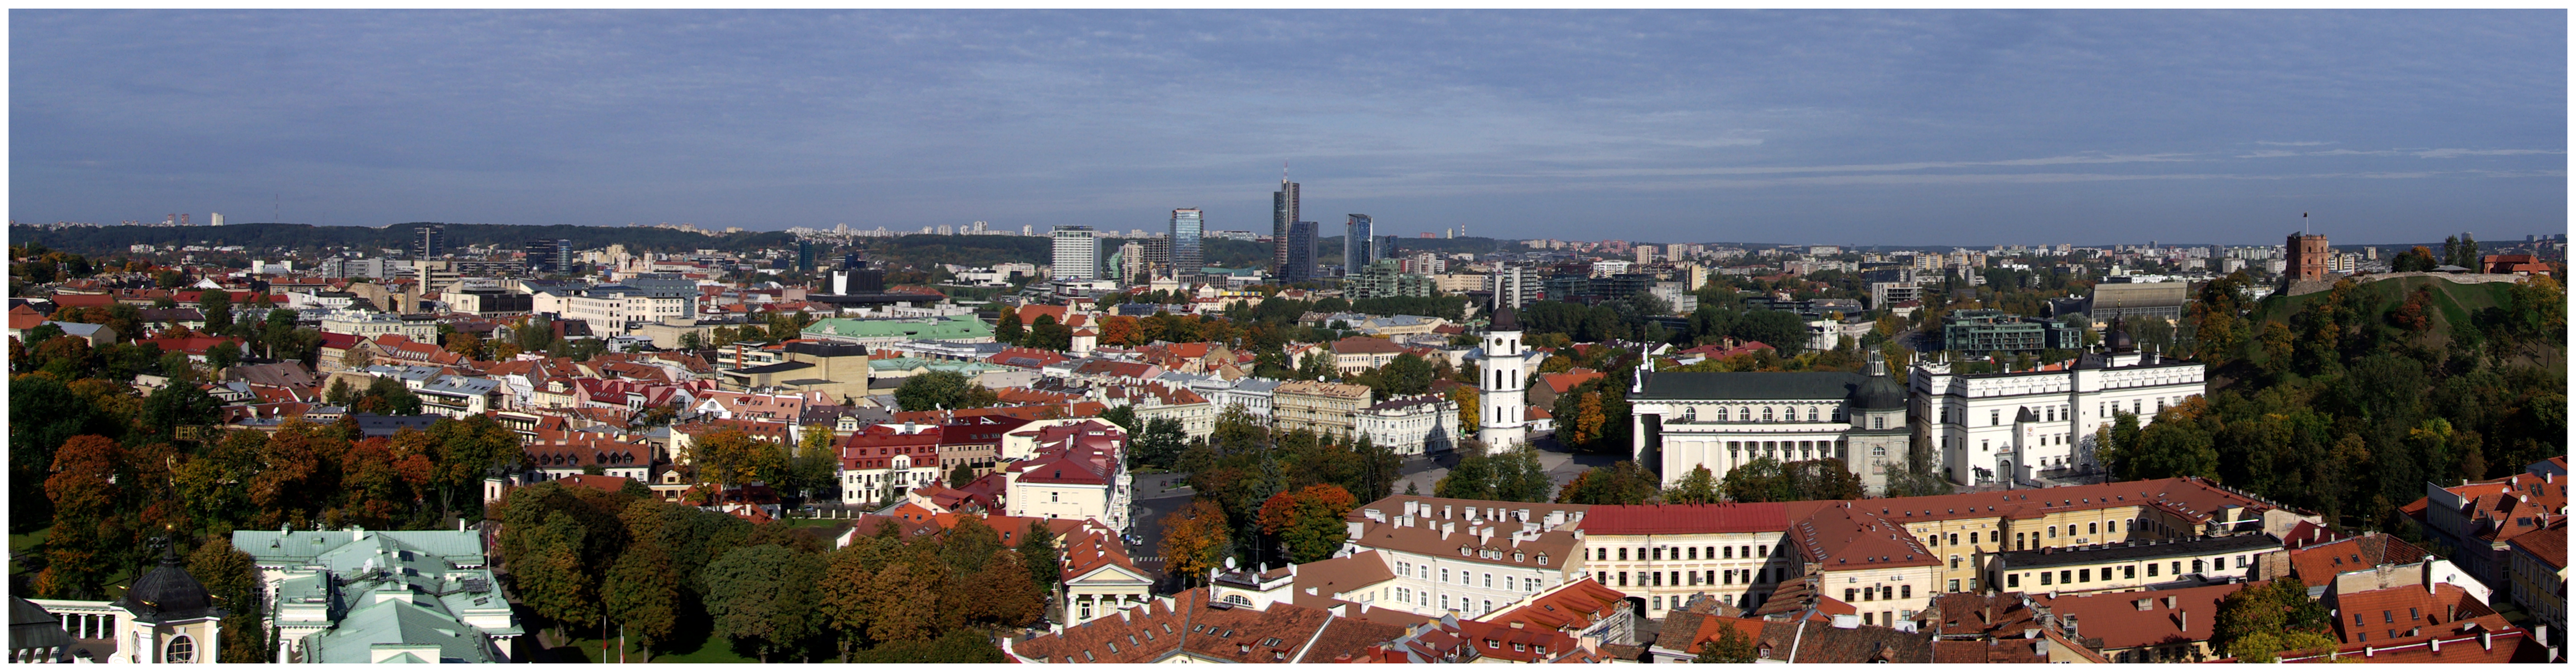 Panorama from Vilnius University bell tower | EXM